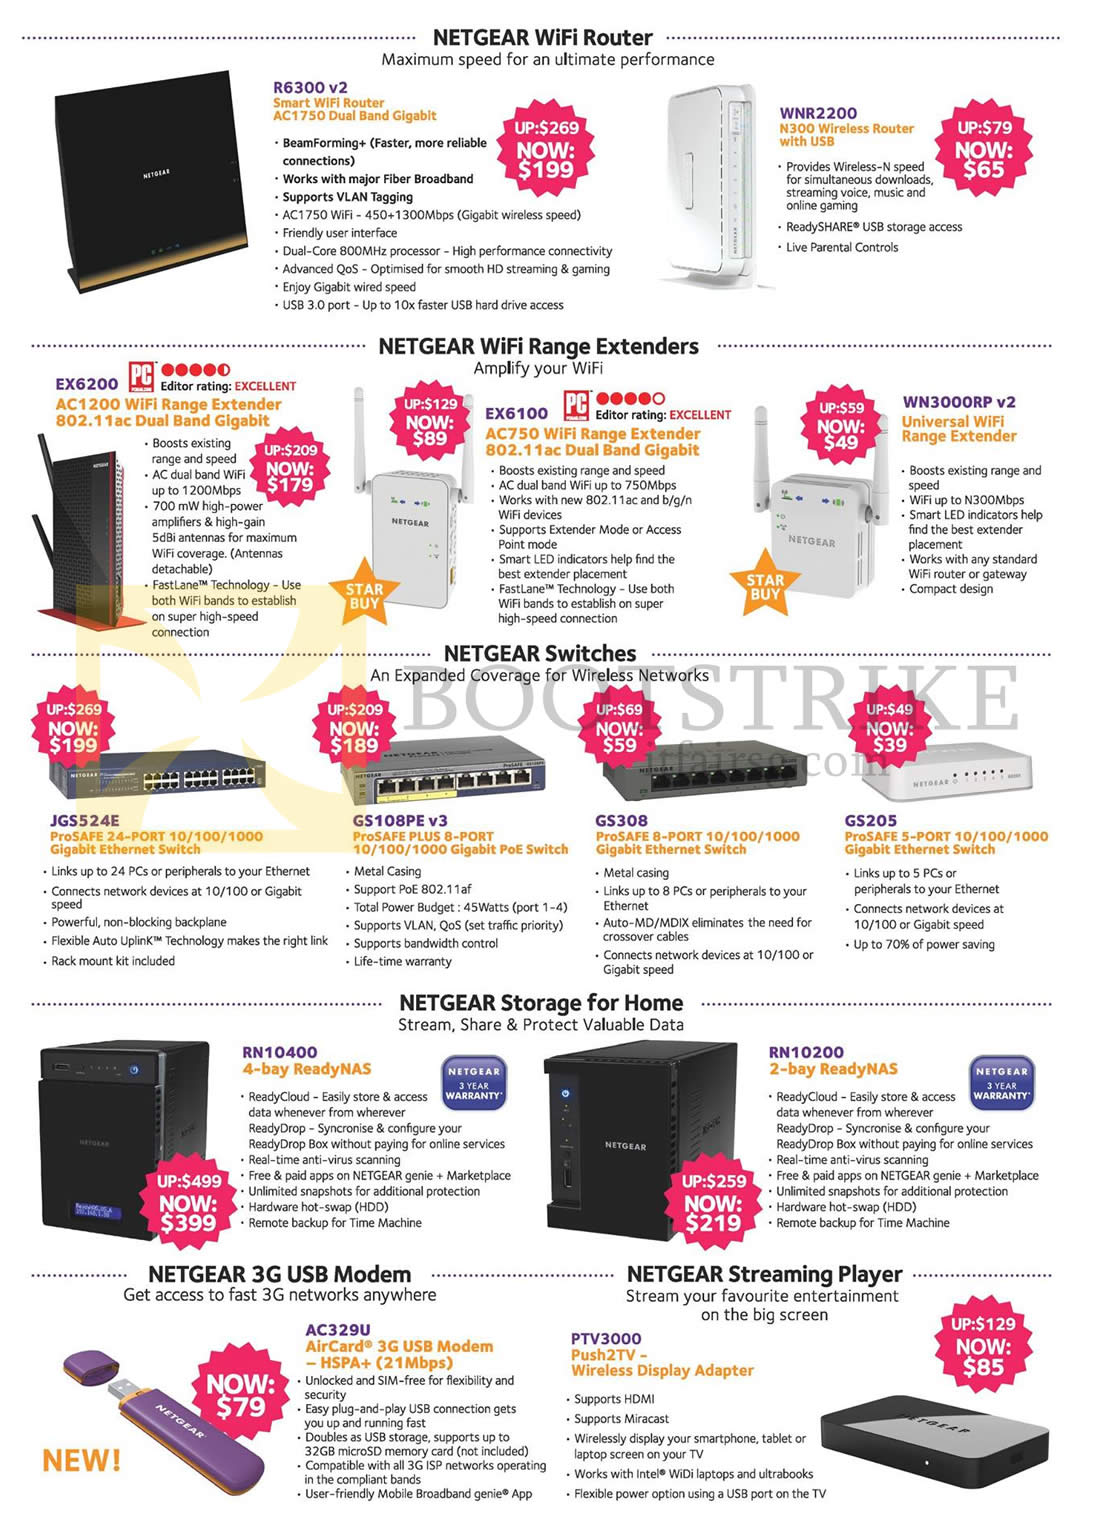 SITEX 2014 price list image brochure of Harvey Norman Netgear Wireless Router, Range Extenders, Switches, 3G USB Modem, Player, R6300 V2, WNR2200, RN10400, AC329U, PTV3000